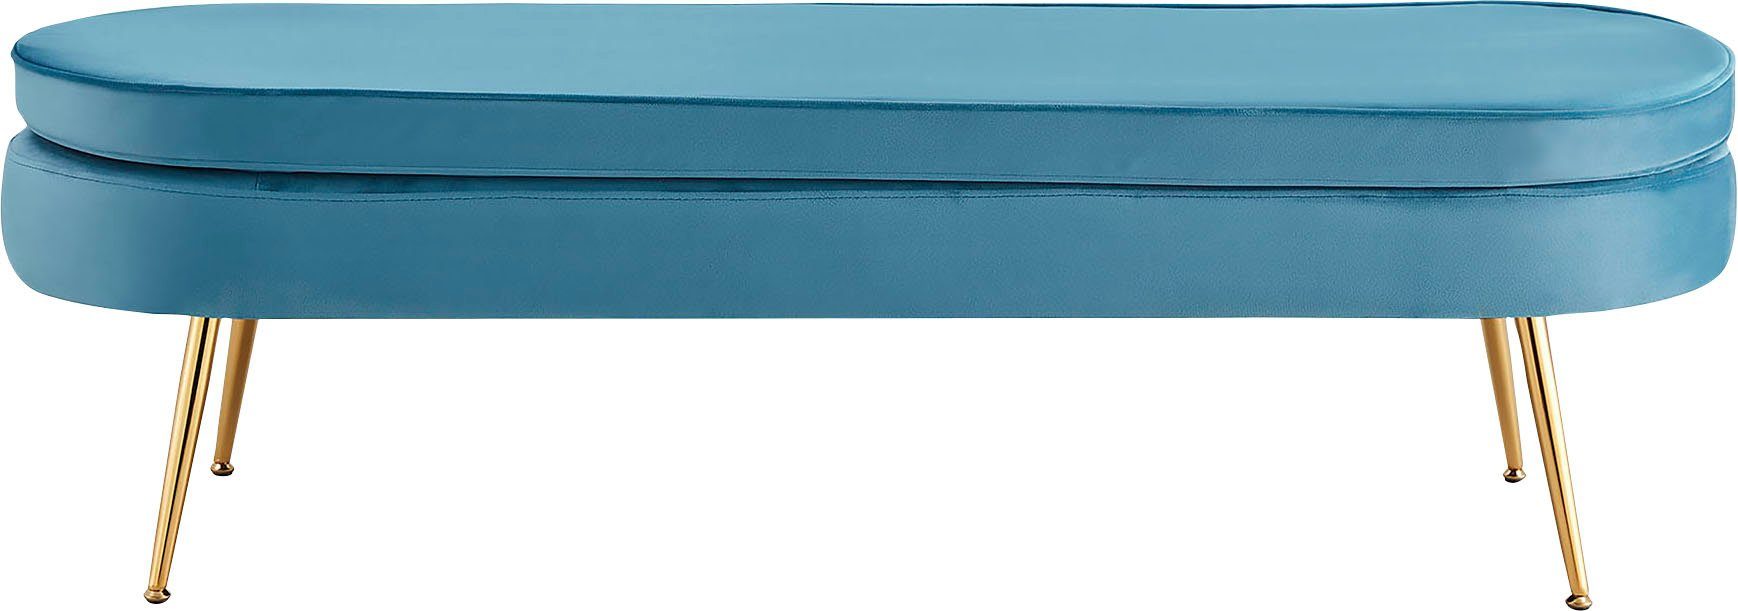 SalesFever Polsterbank Clam, Breite Metallbeine 142 cm, goldfarbene Blau